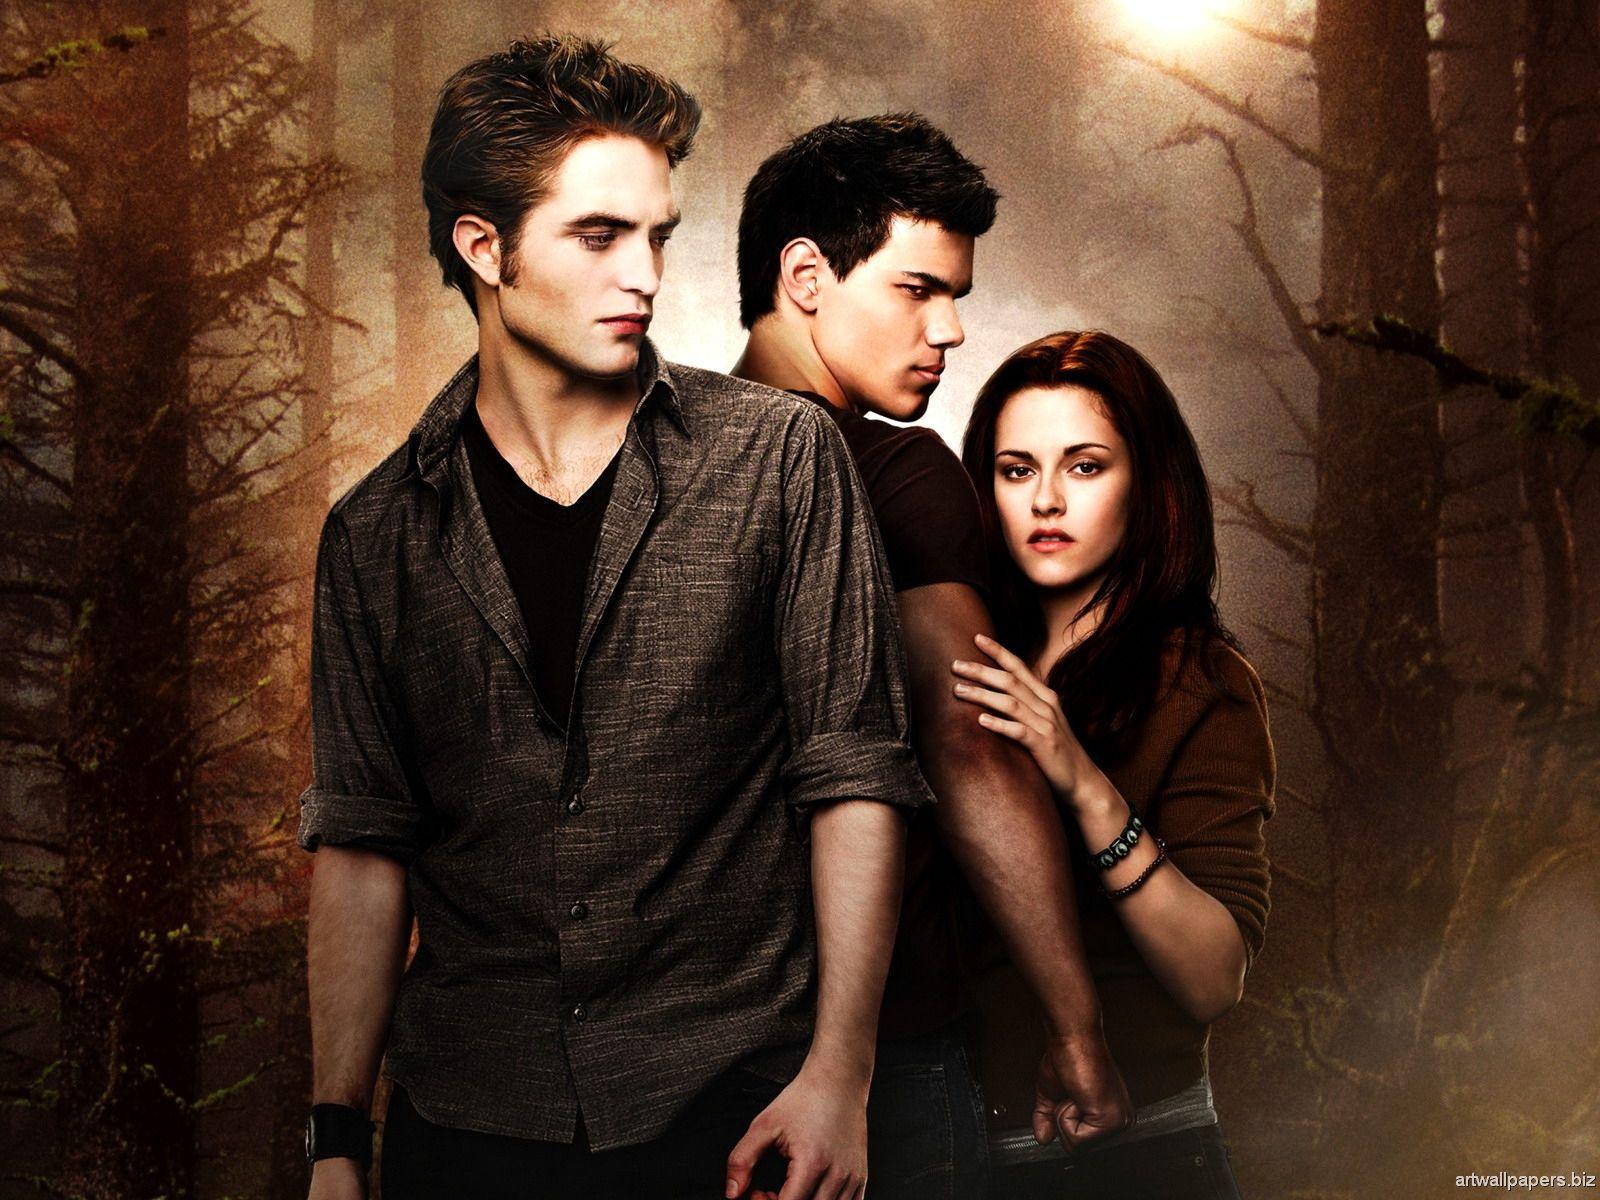 Twilight Saga Wallpaper. The Twilight Saga Wallpaper, Movie